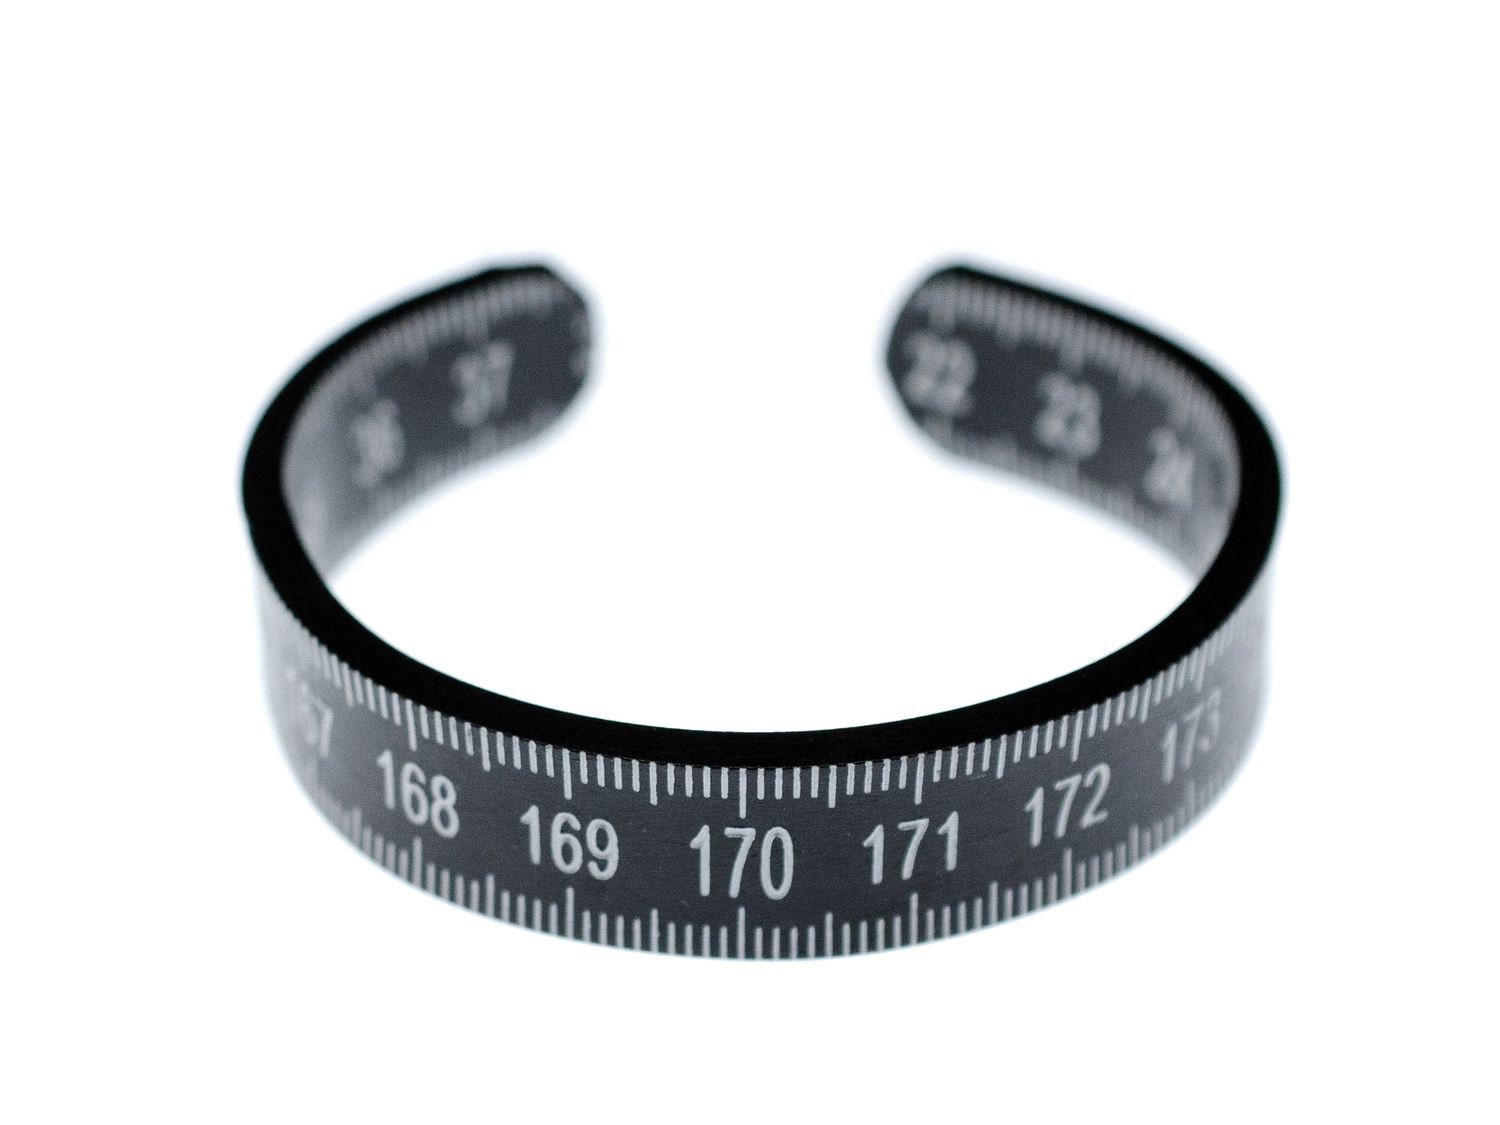 Zollstock Armband Miniblings Messen Maßband Metermaß Upcycling Recycling Schwarz von Miniblings